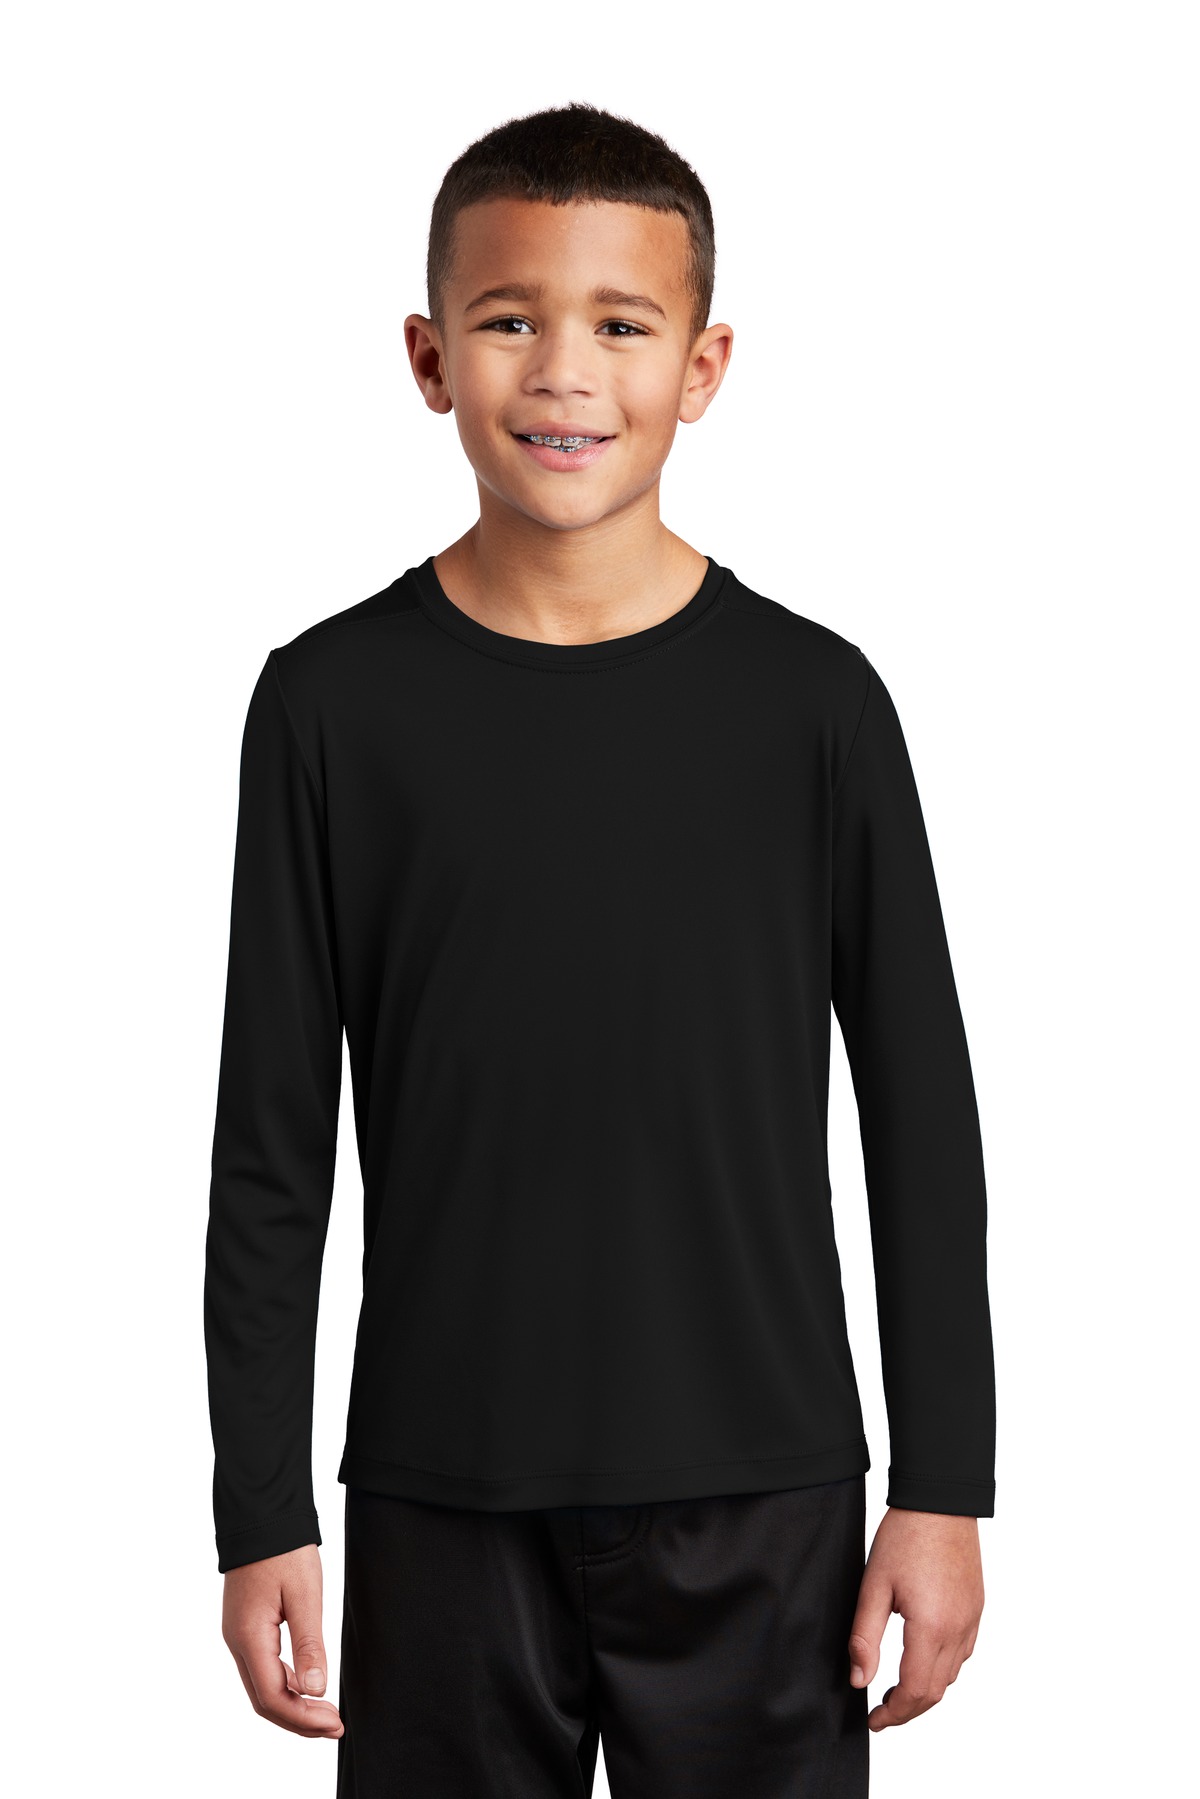 Sport-Tek Activewear Youth T-Shirts for Hospitality ® Youth Posi-UV Pro Long Sleeve Tee.-Sport-Tek